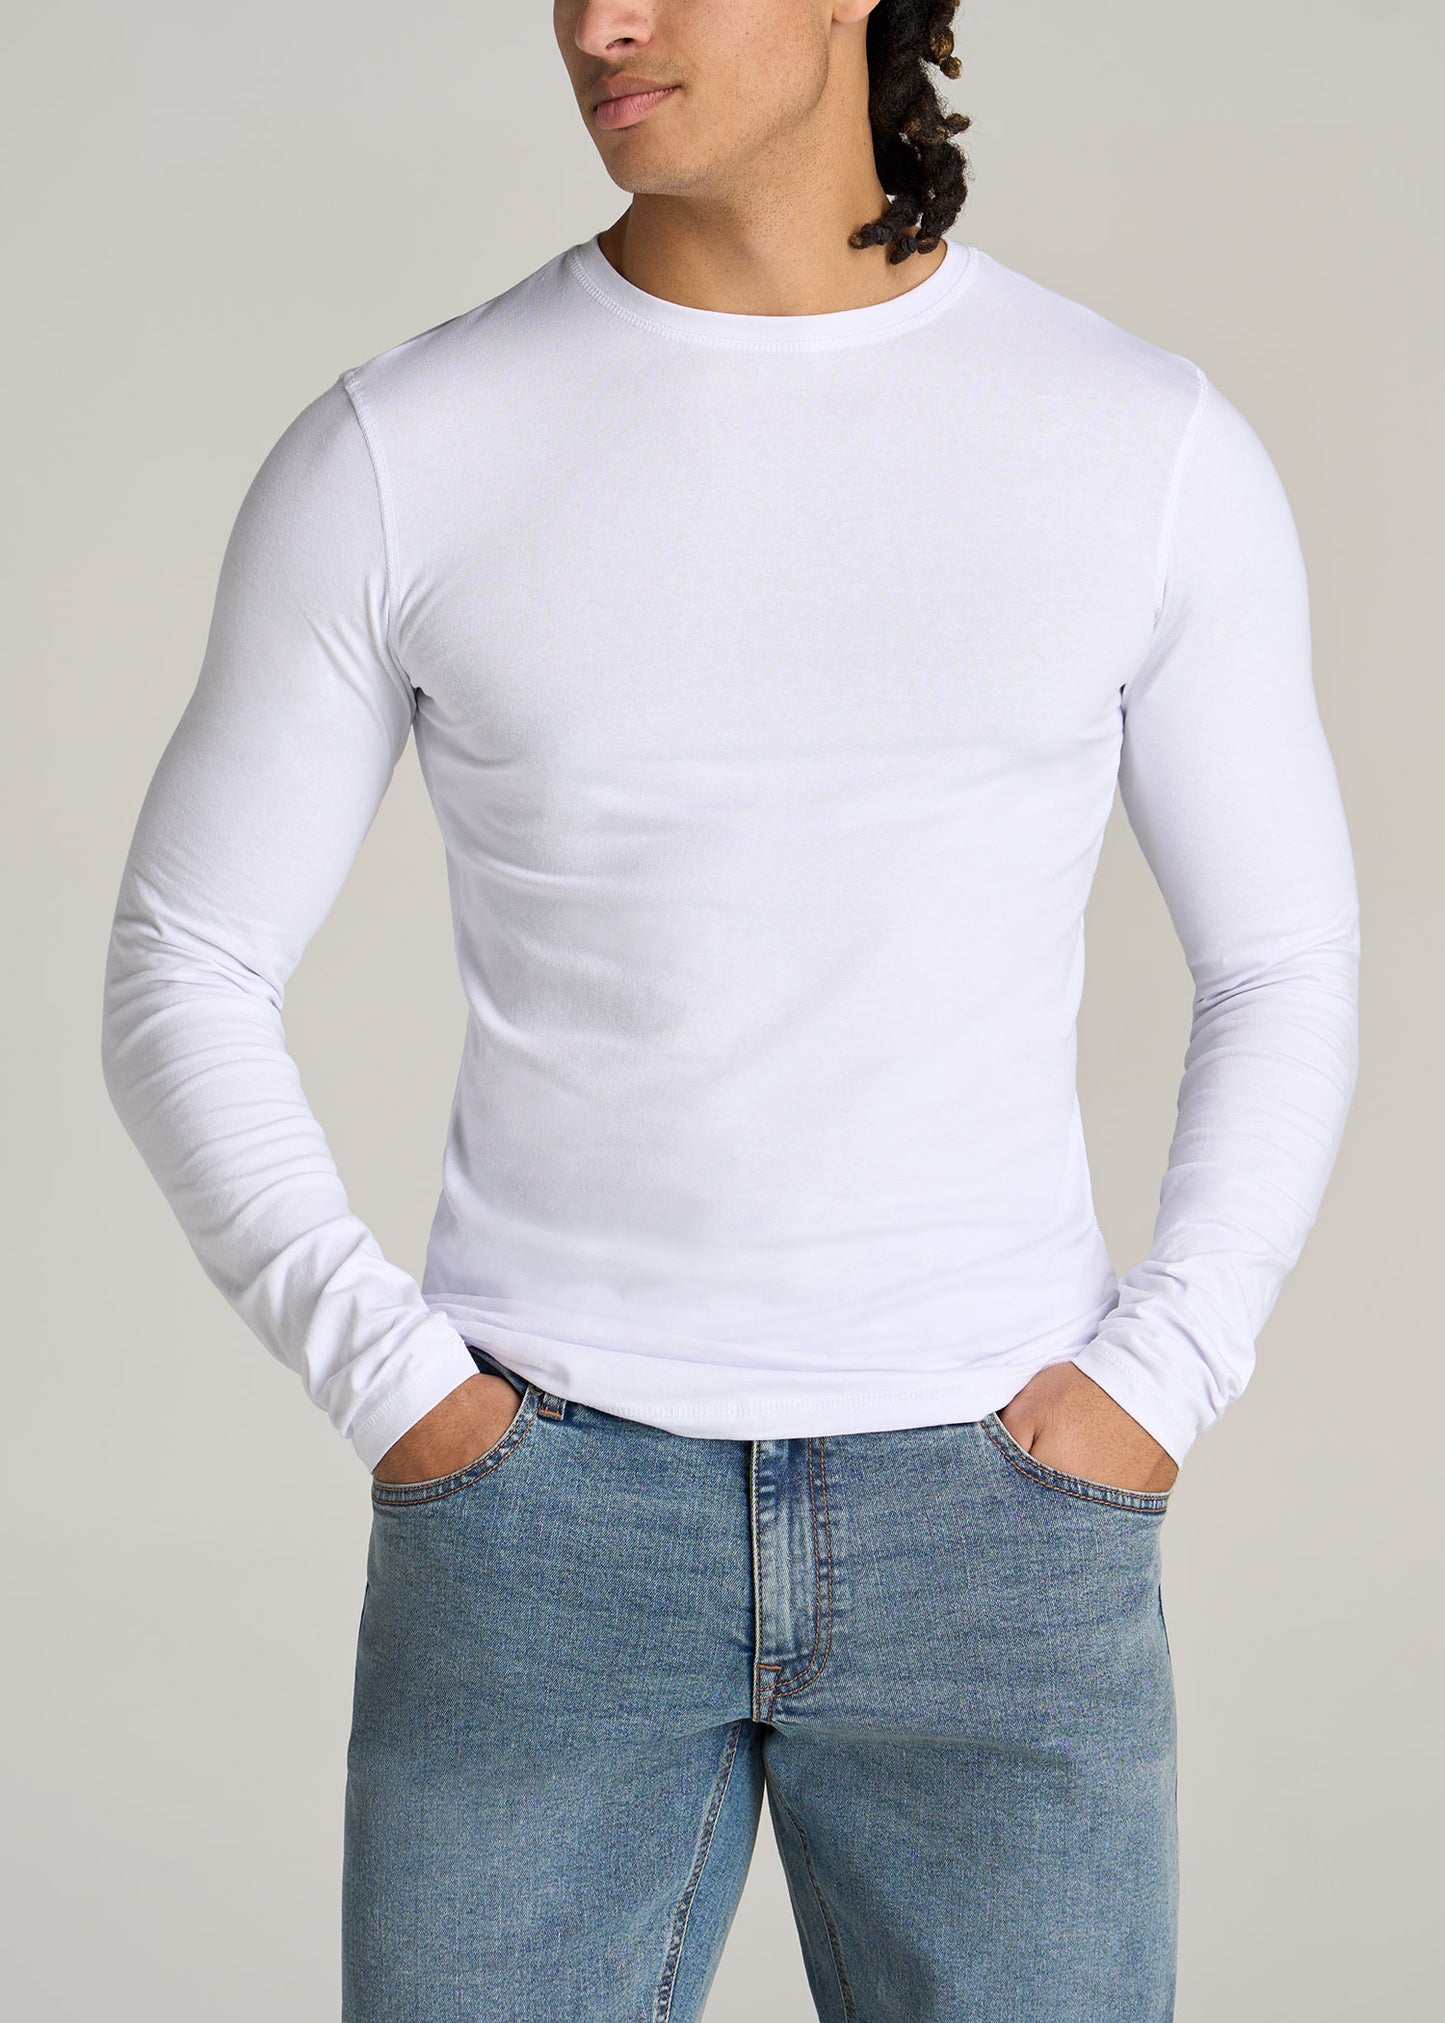 Slim Long Sleeve T Shirt: Tall Men's Slim Fit White Tee – American Tall